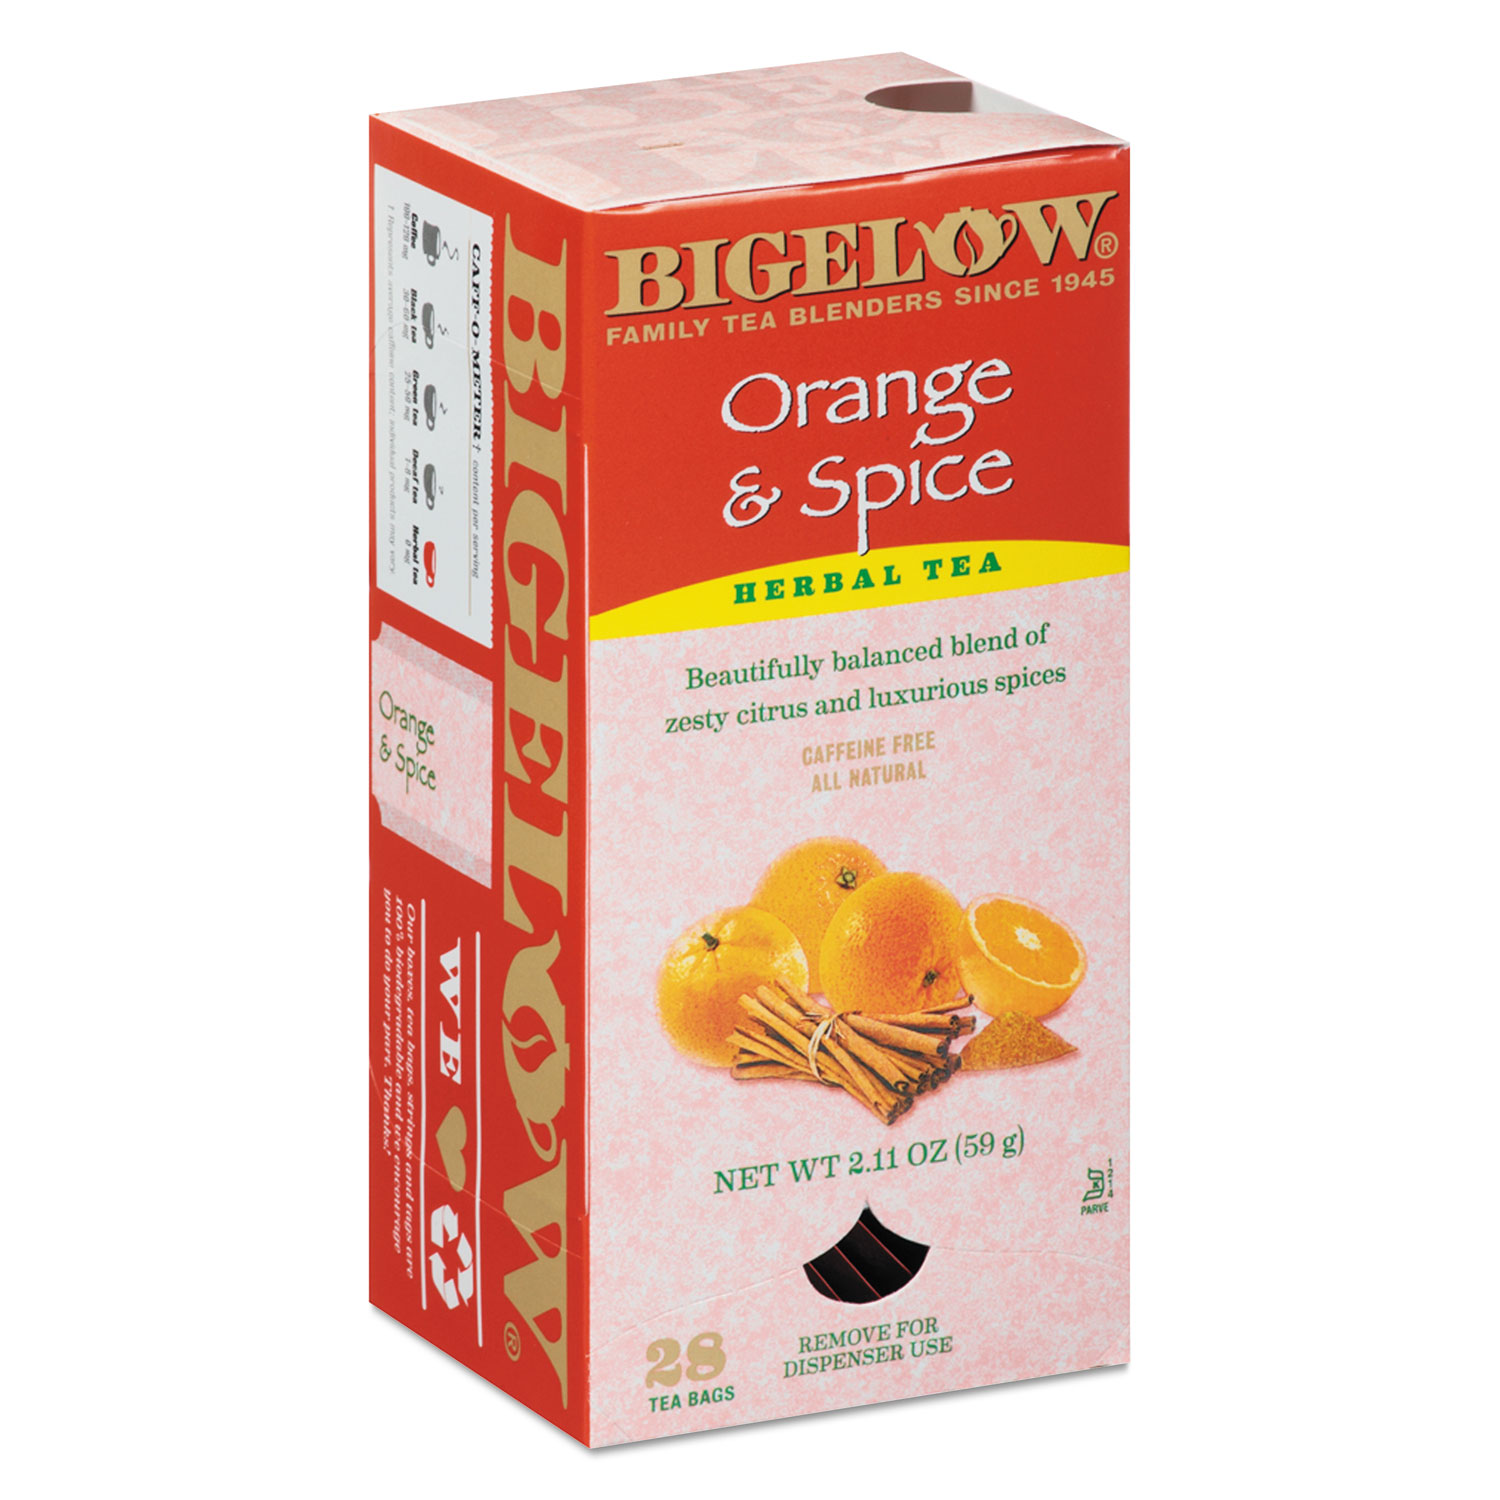 Orange and Spice Herbal Tea, 28/Box